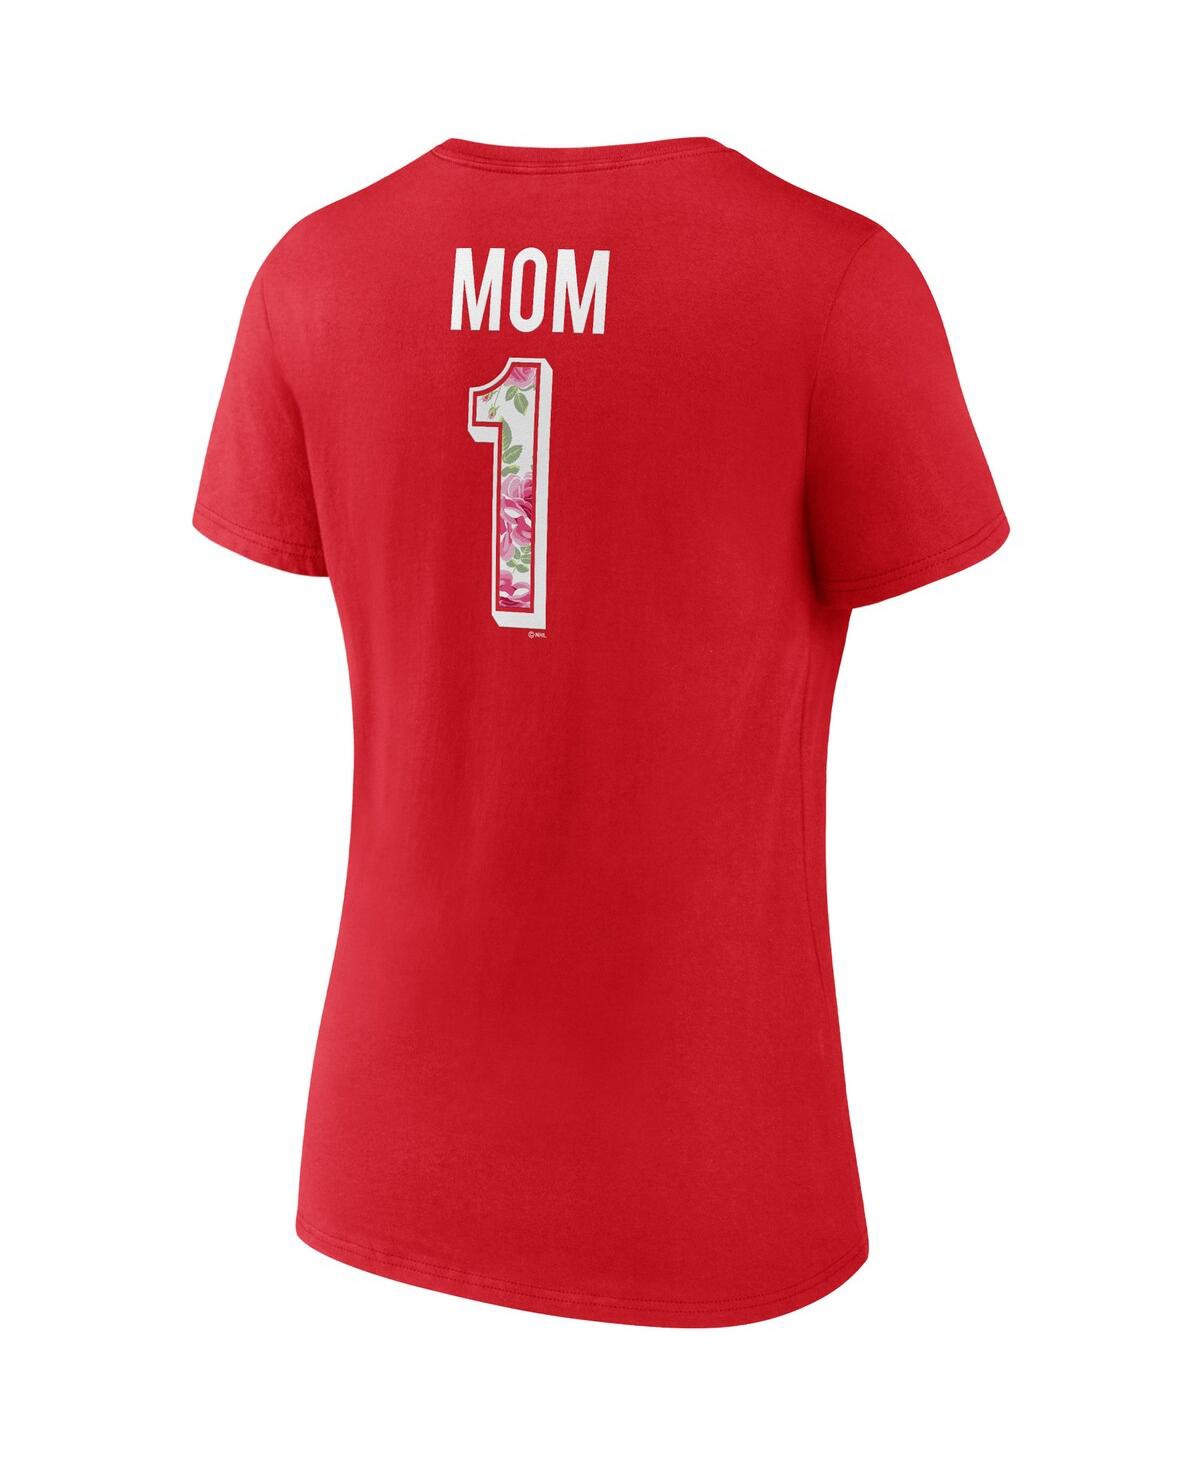 Shop Fanatics Women's  Red Washington Capitals Team Mother's Day V-neck T-shirt